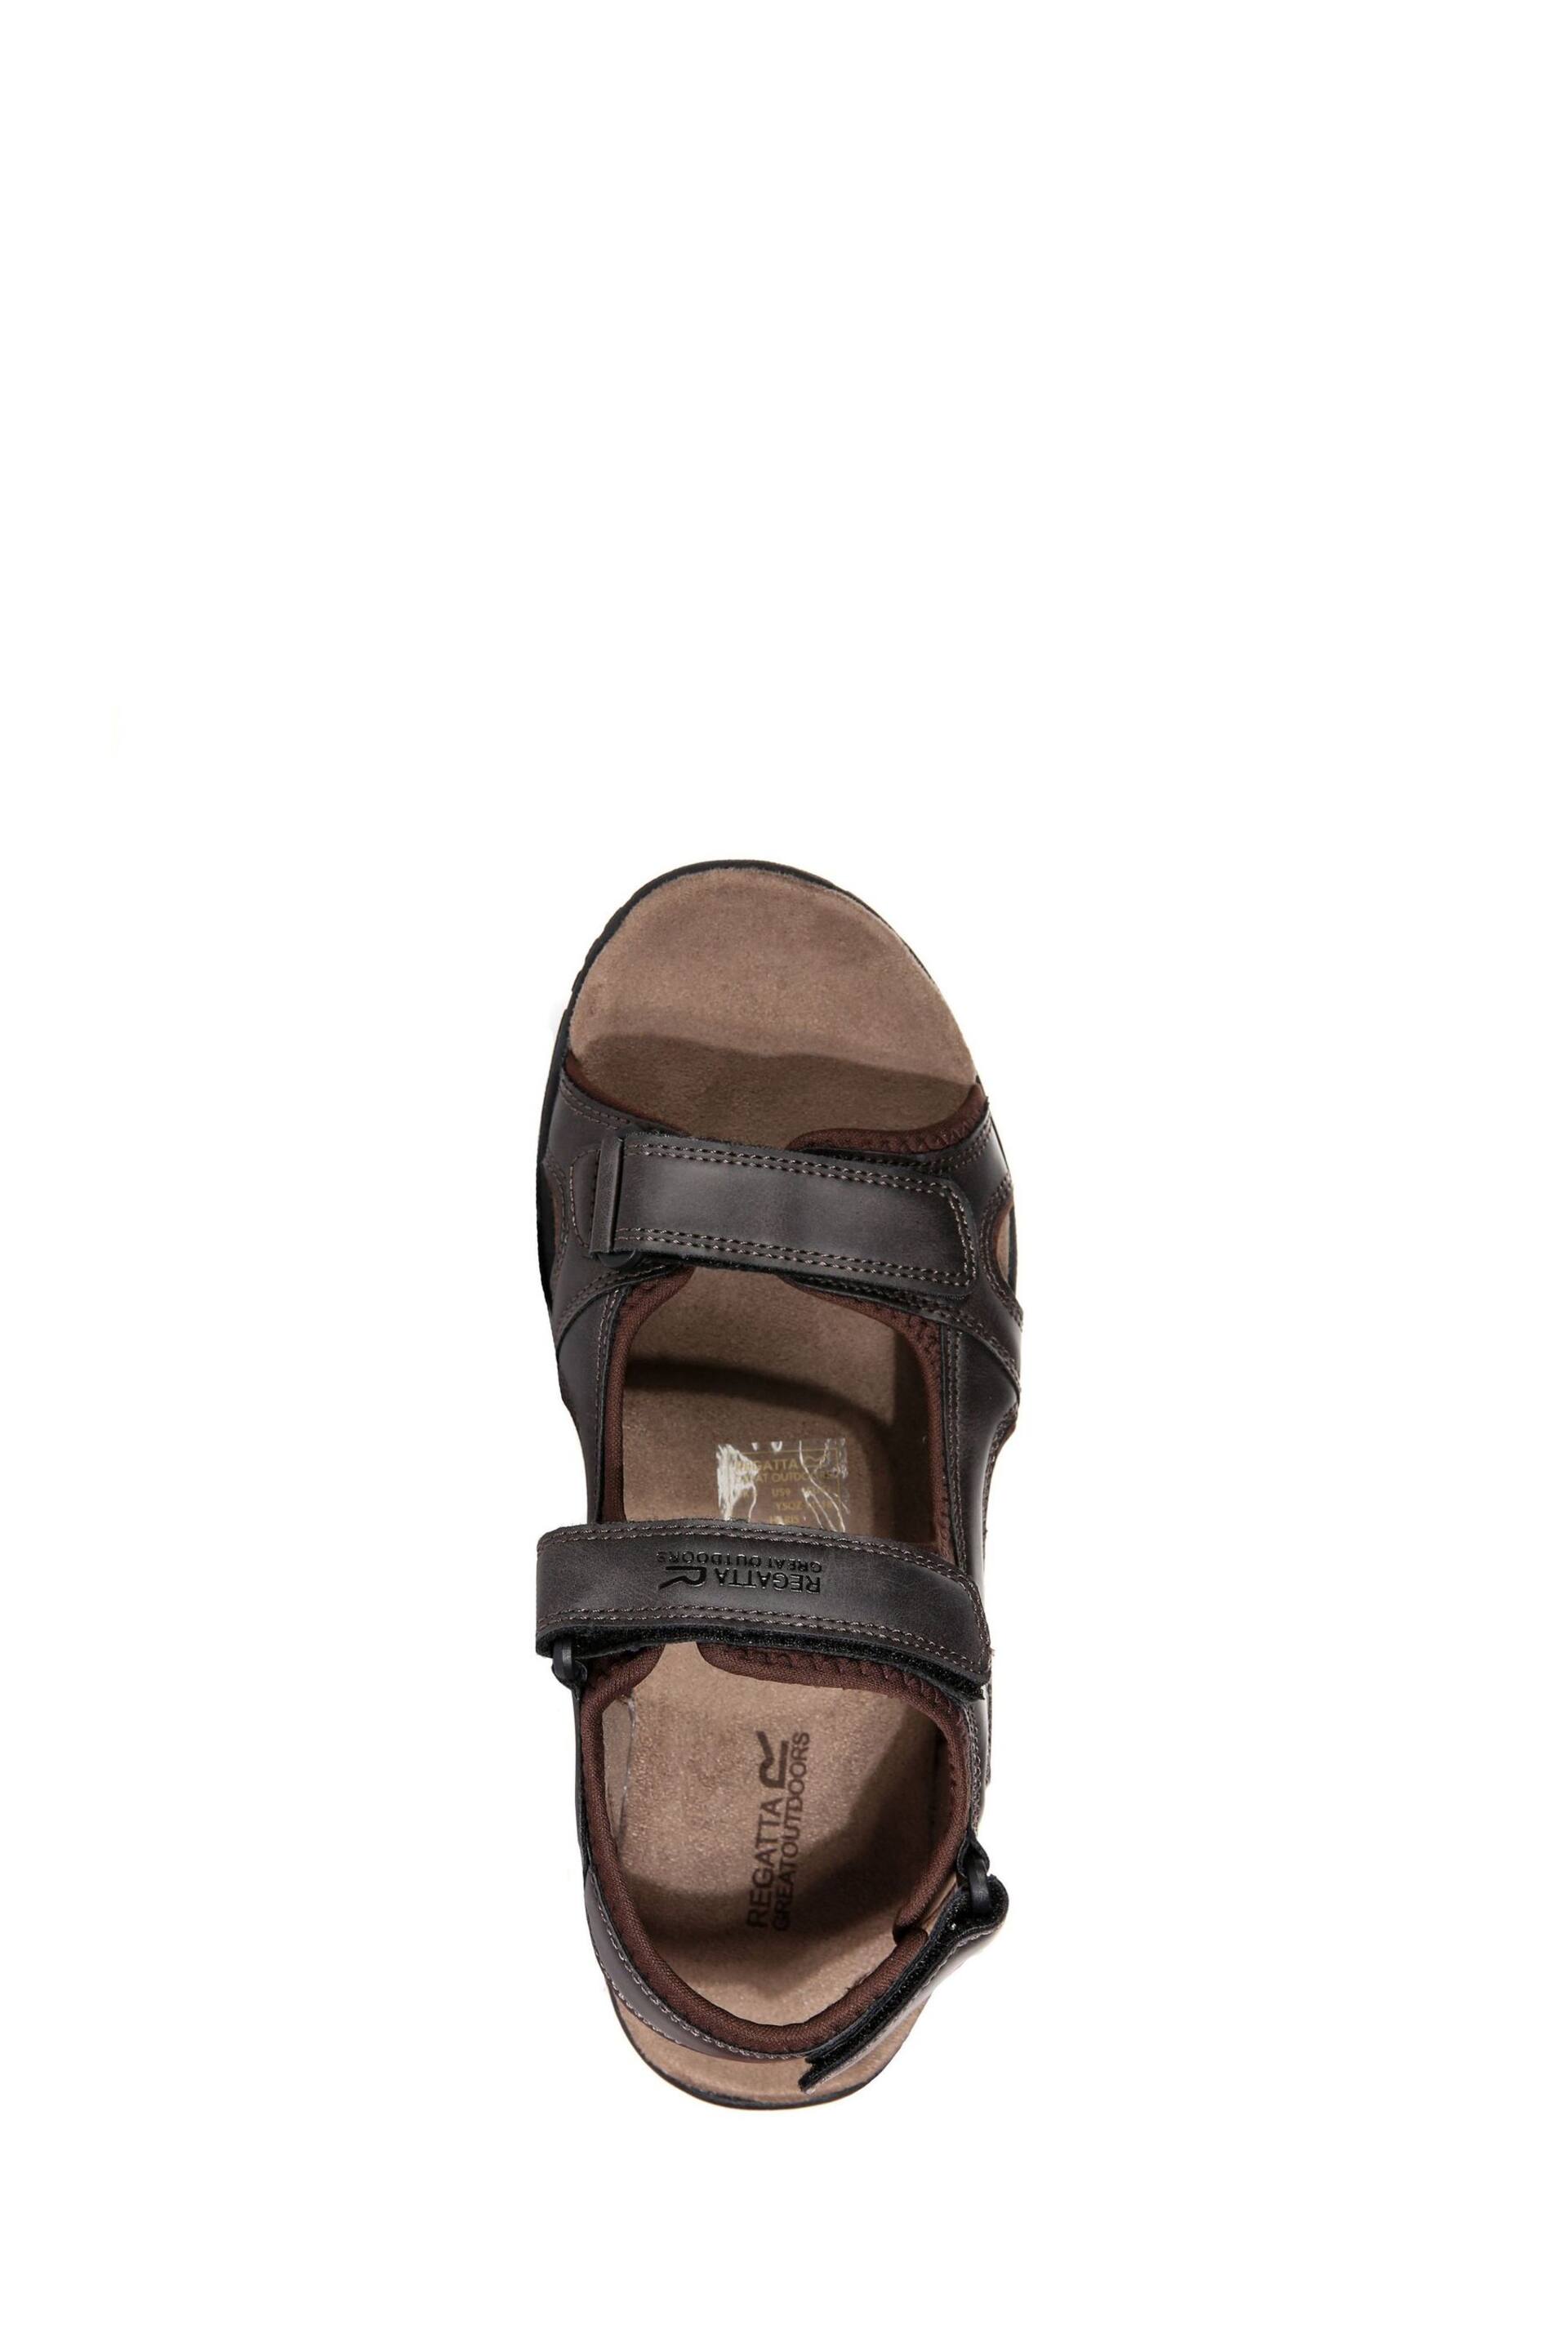 Regatta Dark Brown Haris Comfort Fit Sandals - Image 2 of 2